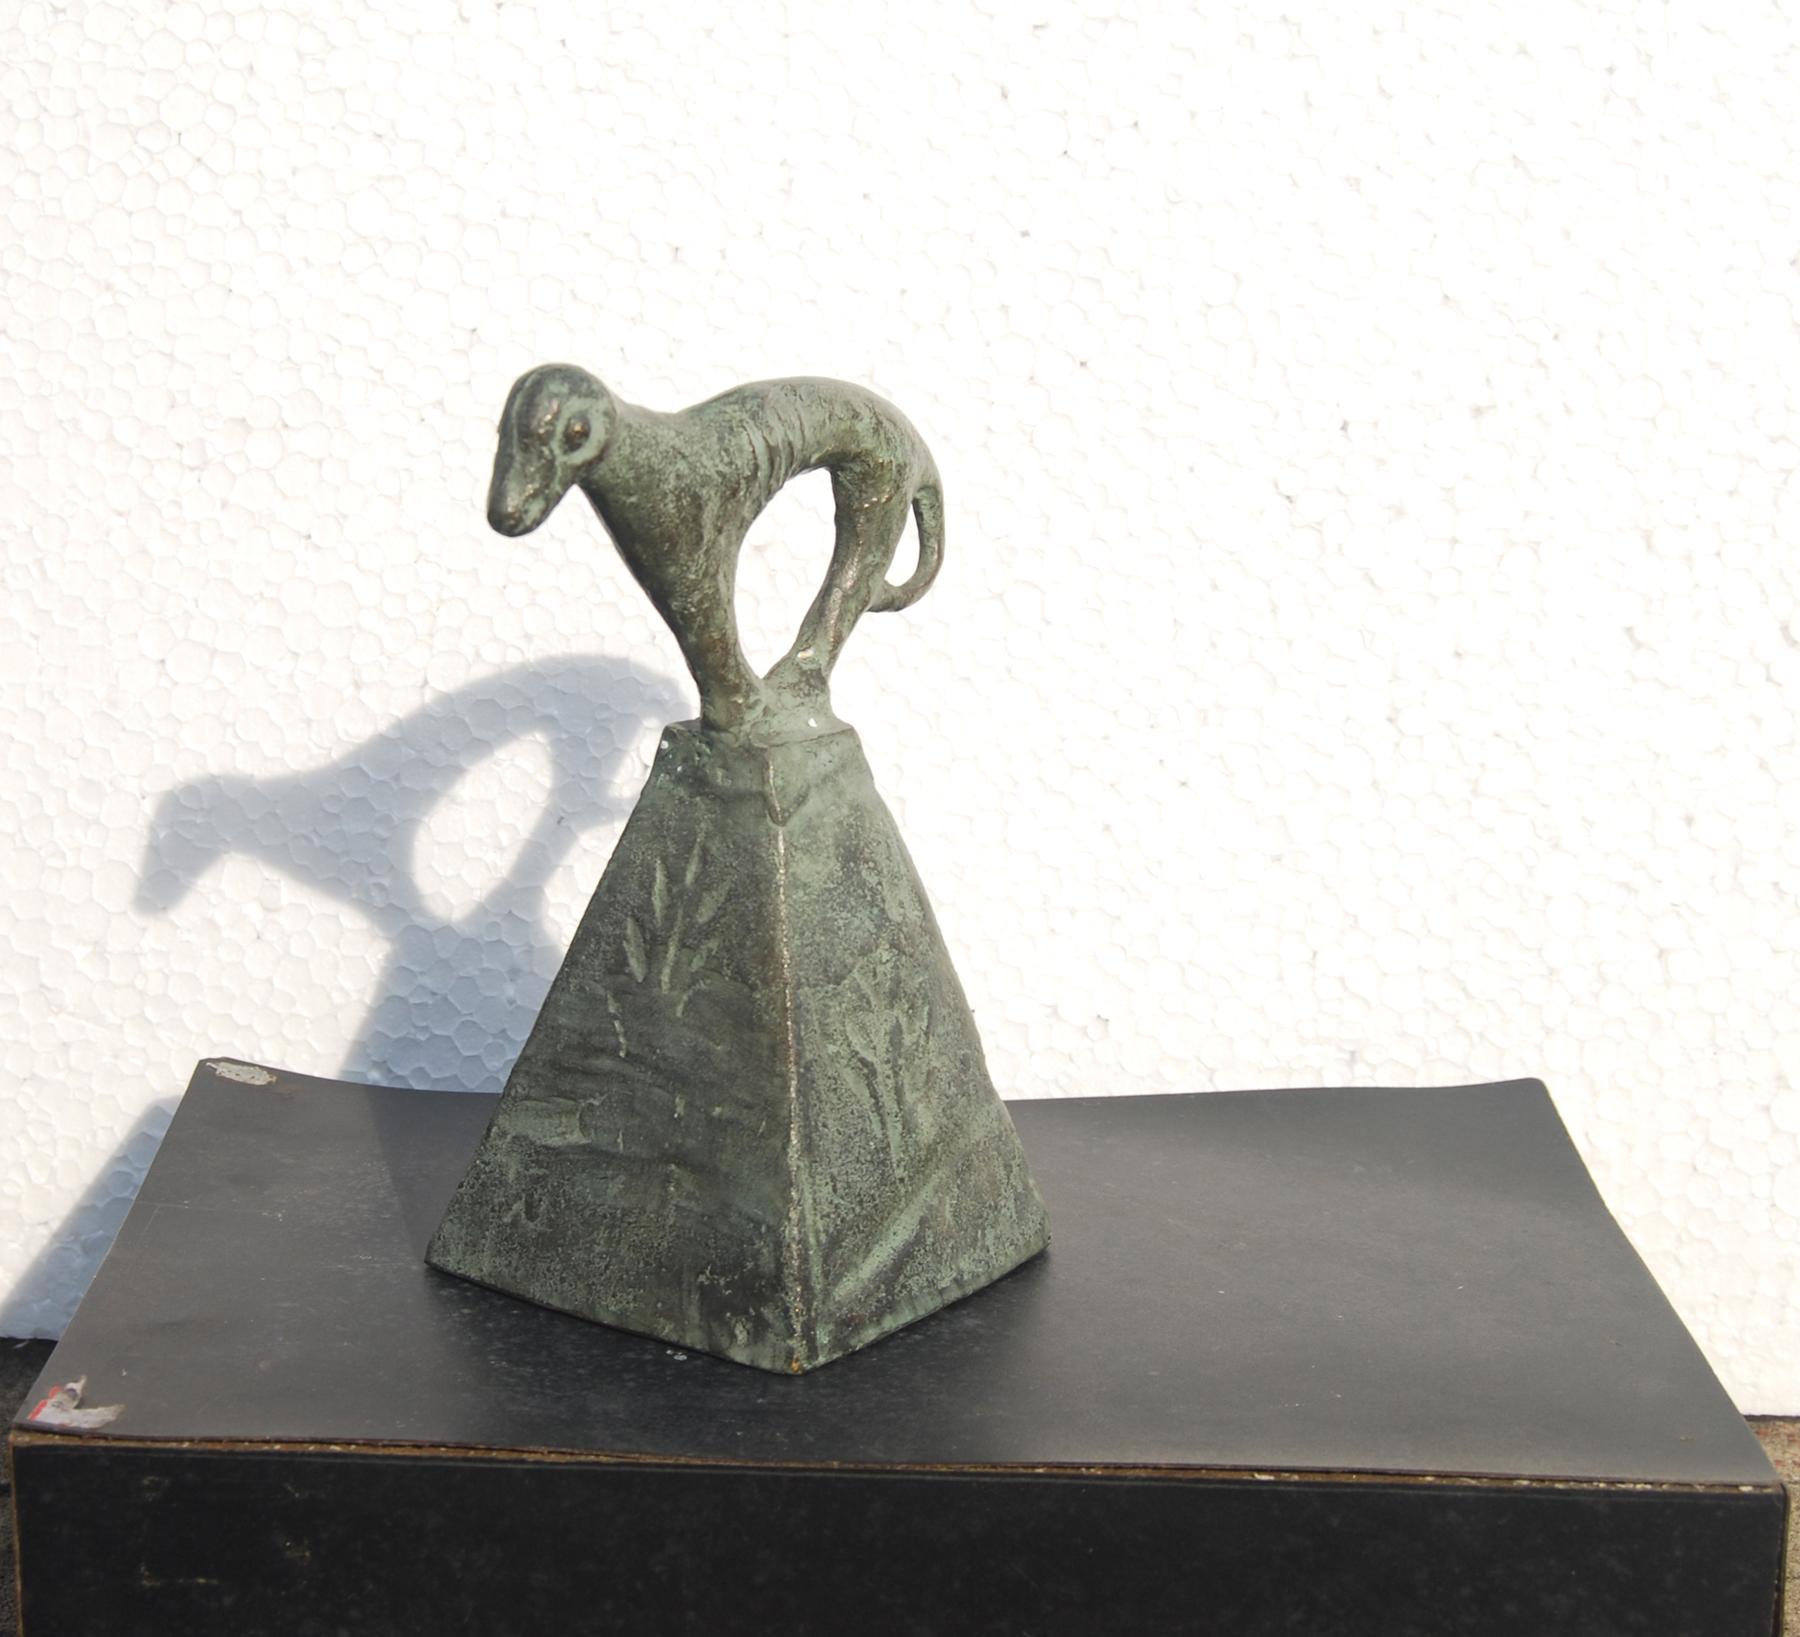 Dog perched on Hillock, Folk style, Motifs, Bronze, Animal Sculpture 